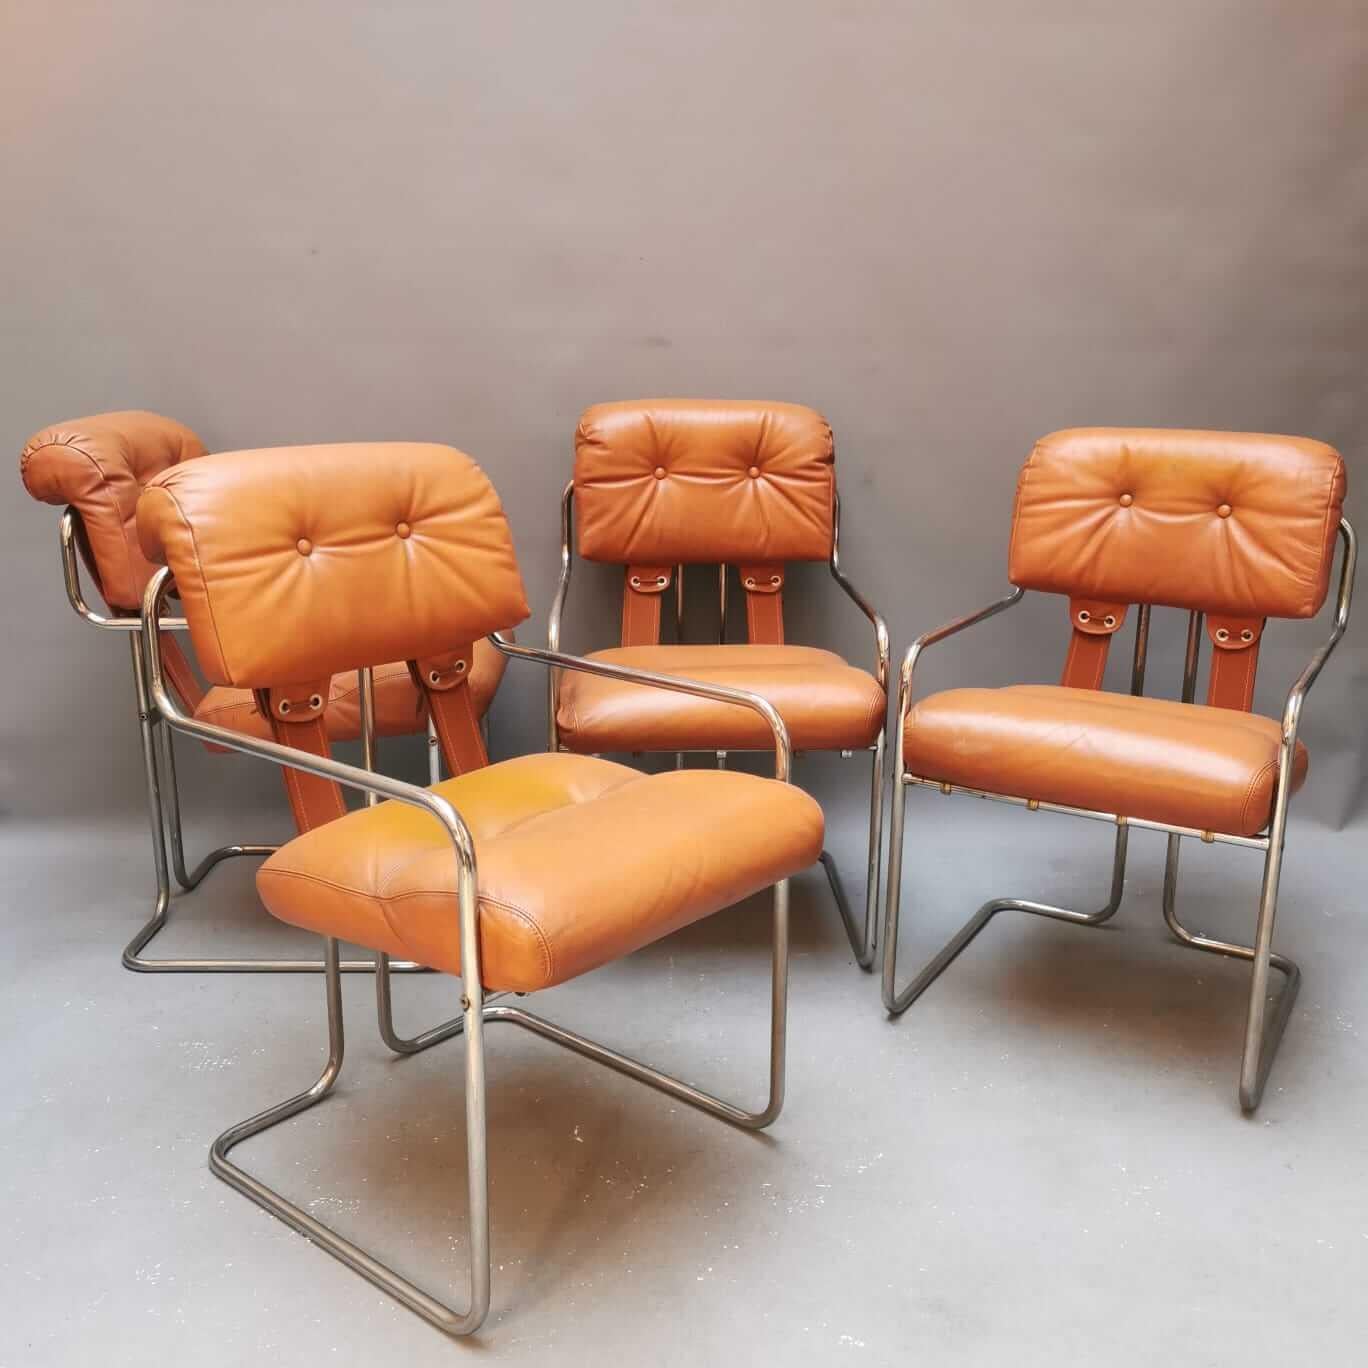 tucroma chairs